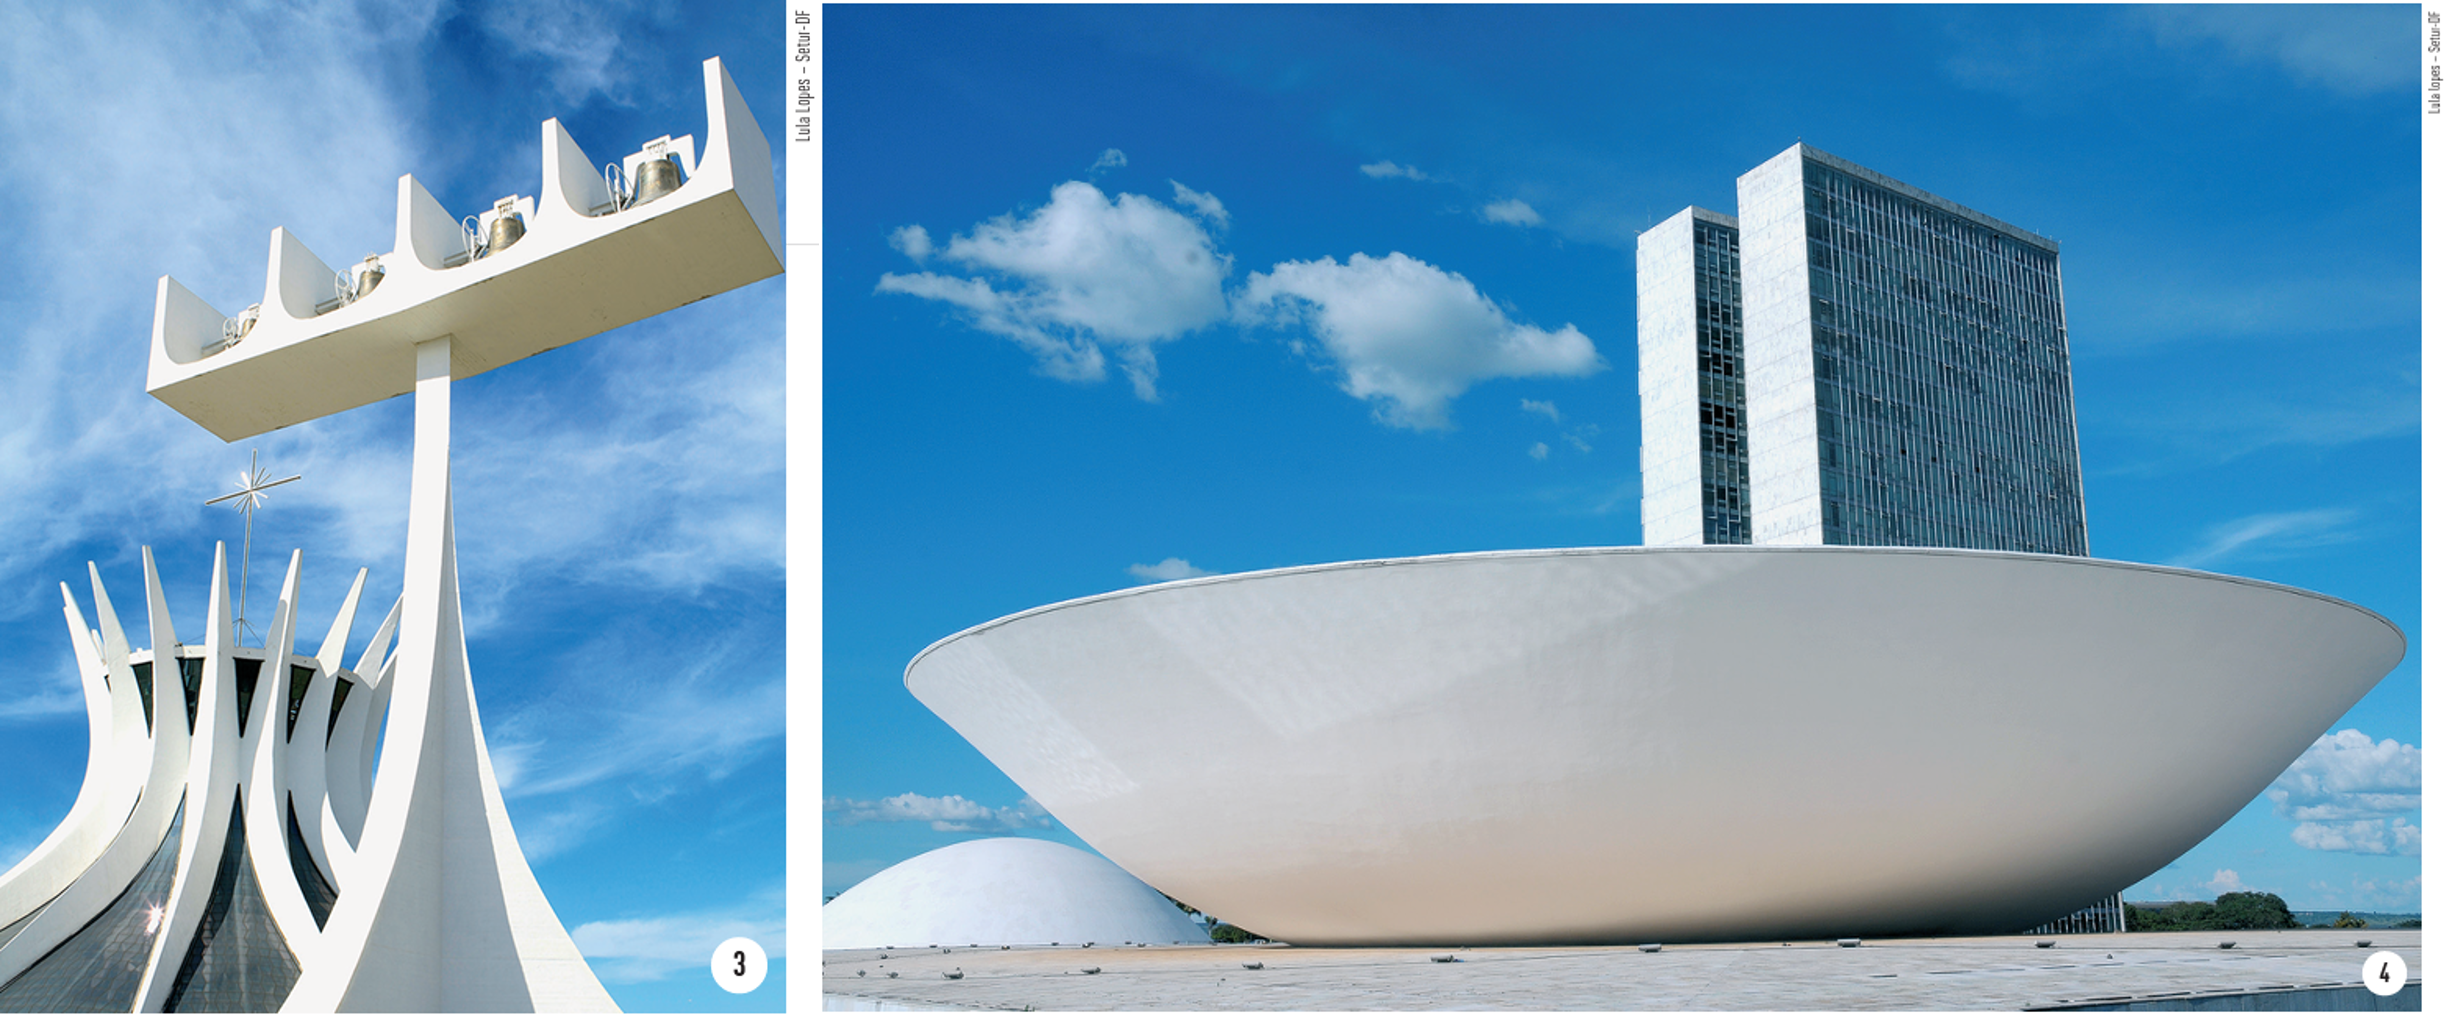 Brasilia Landmarks  Sketch Stock Photo Picture And Royalty Free Image  Image 26175028